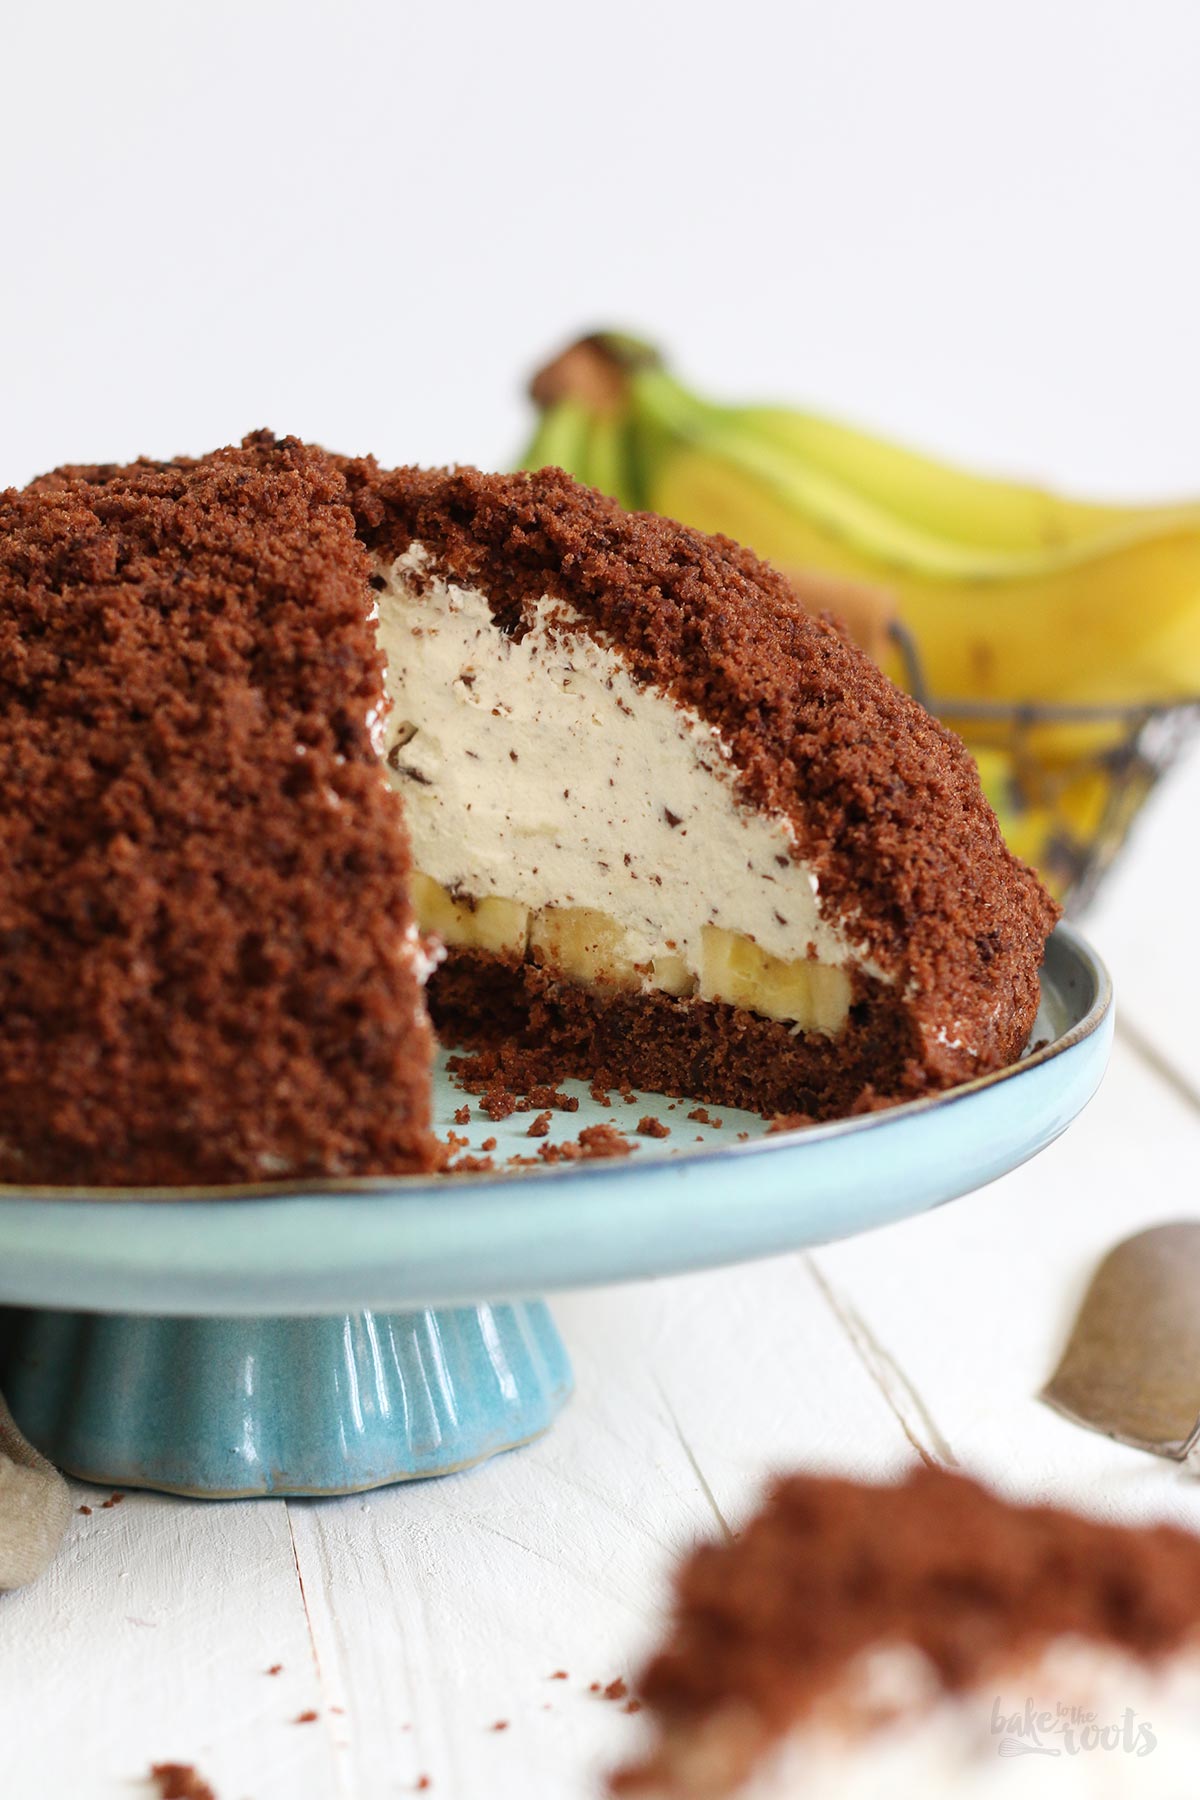 Maulwurfkuchen mit Bananen | Bake to the roots